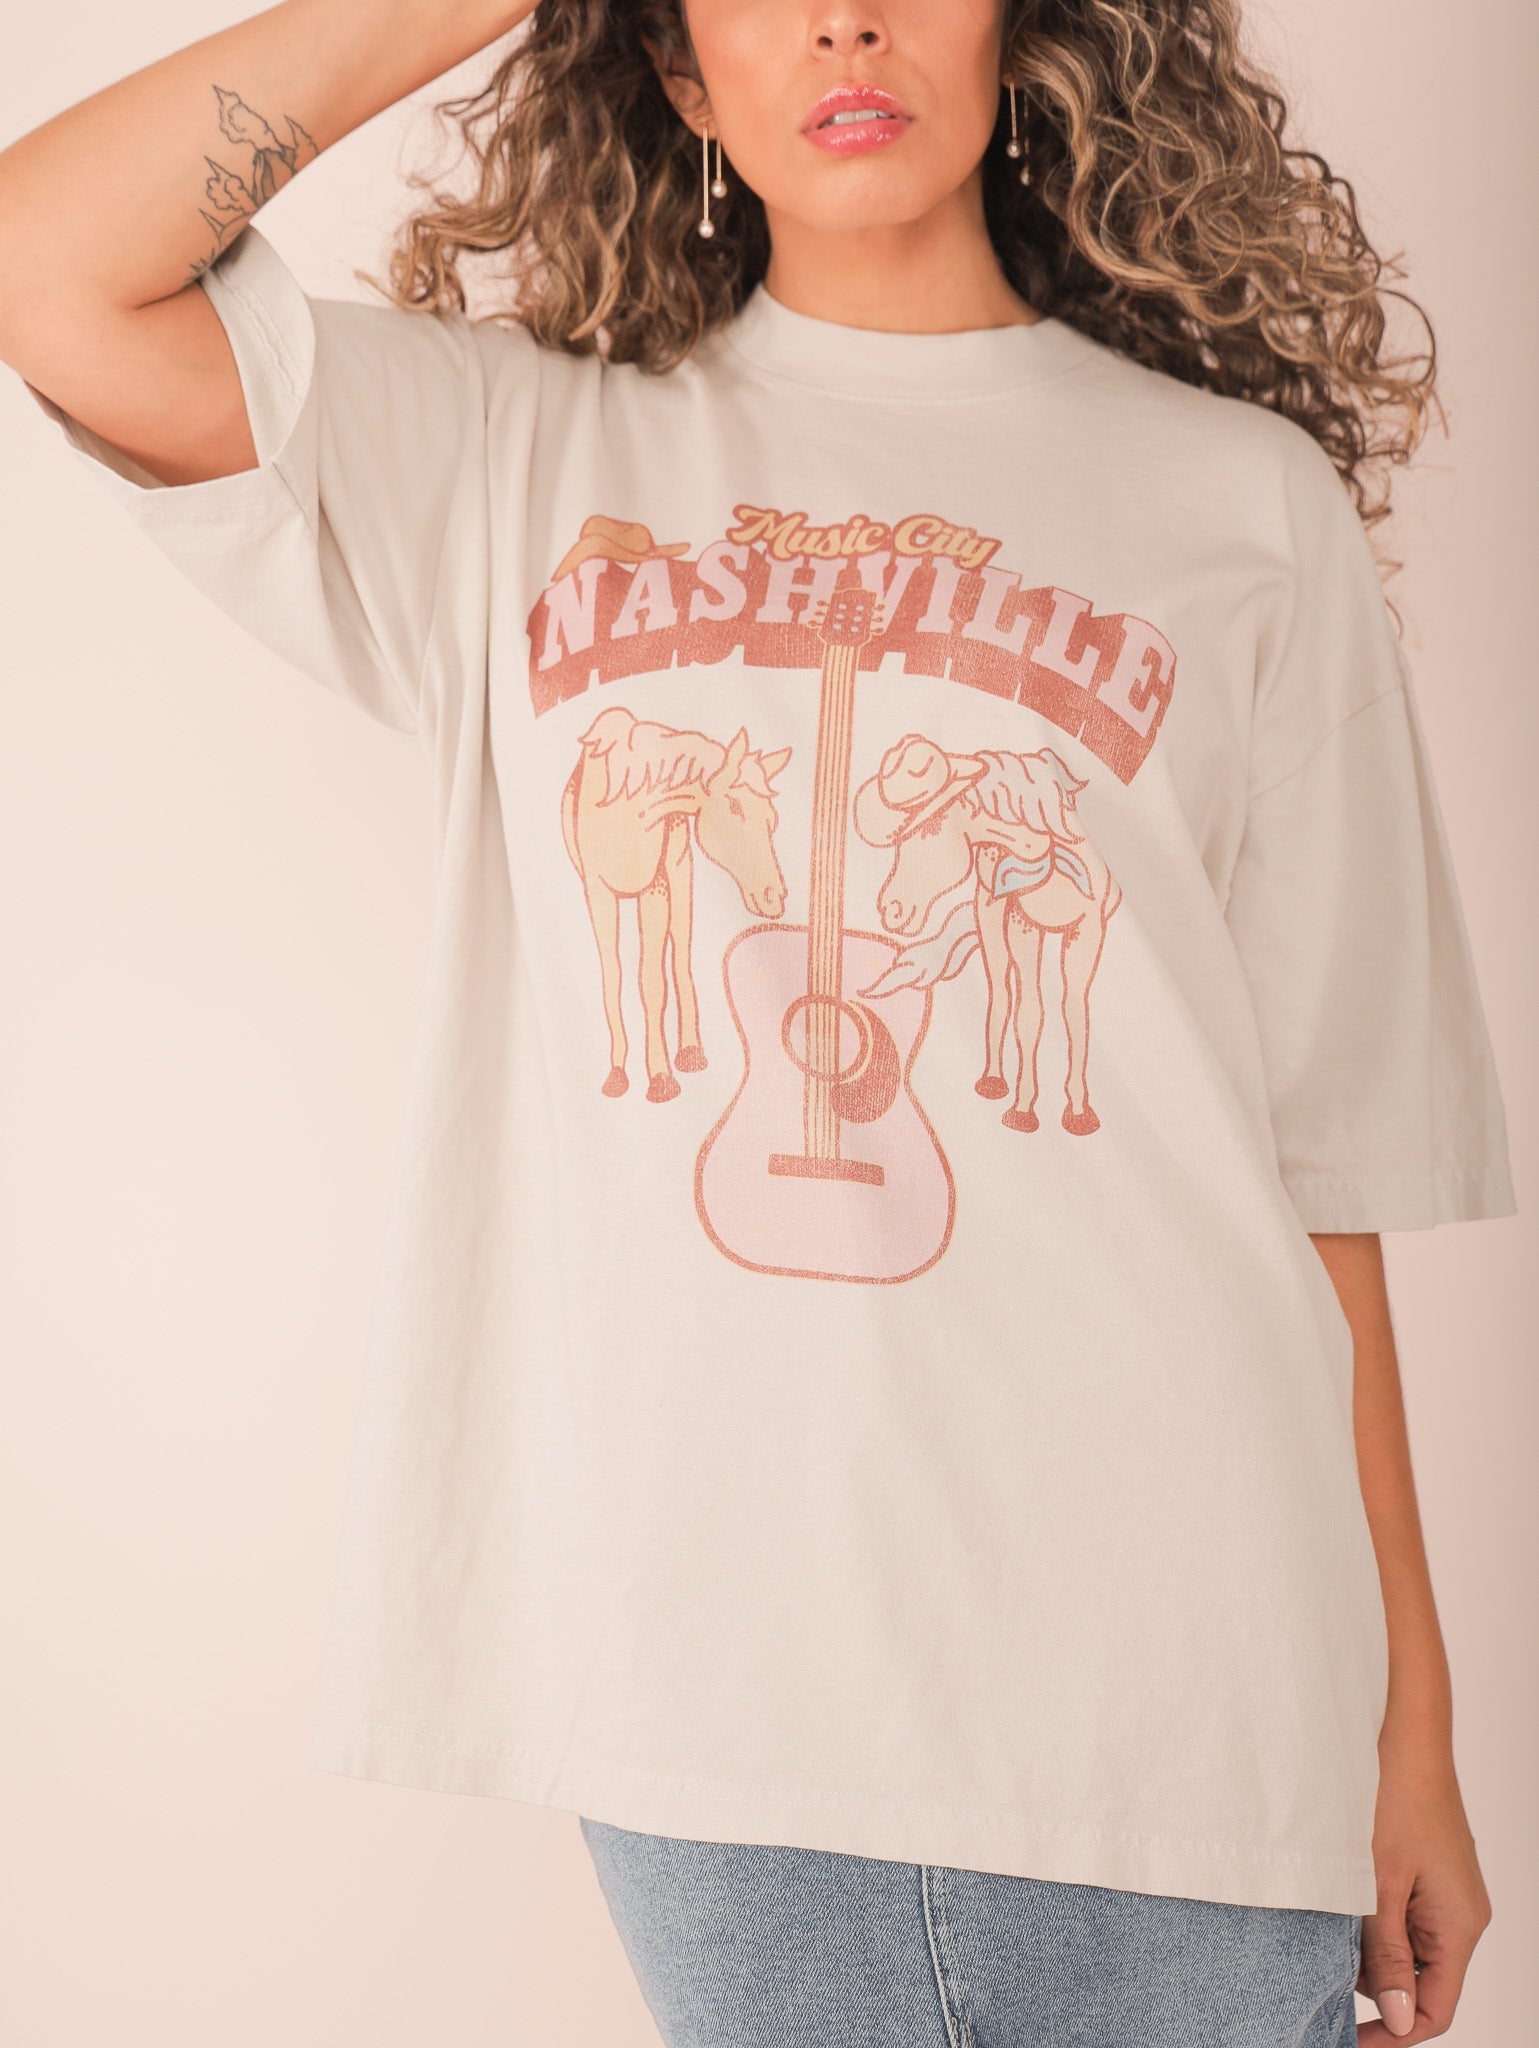 Molly Green - Nashville Music City Tee - Casual_Tops